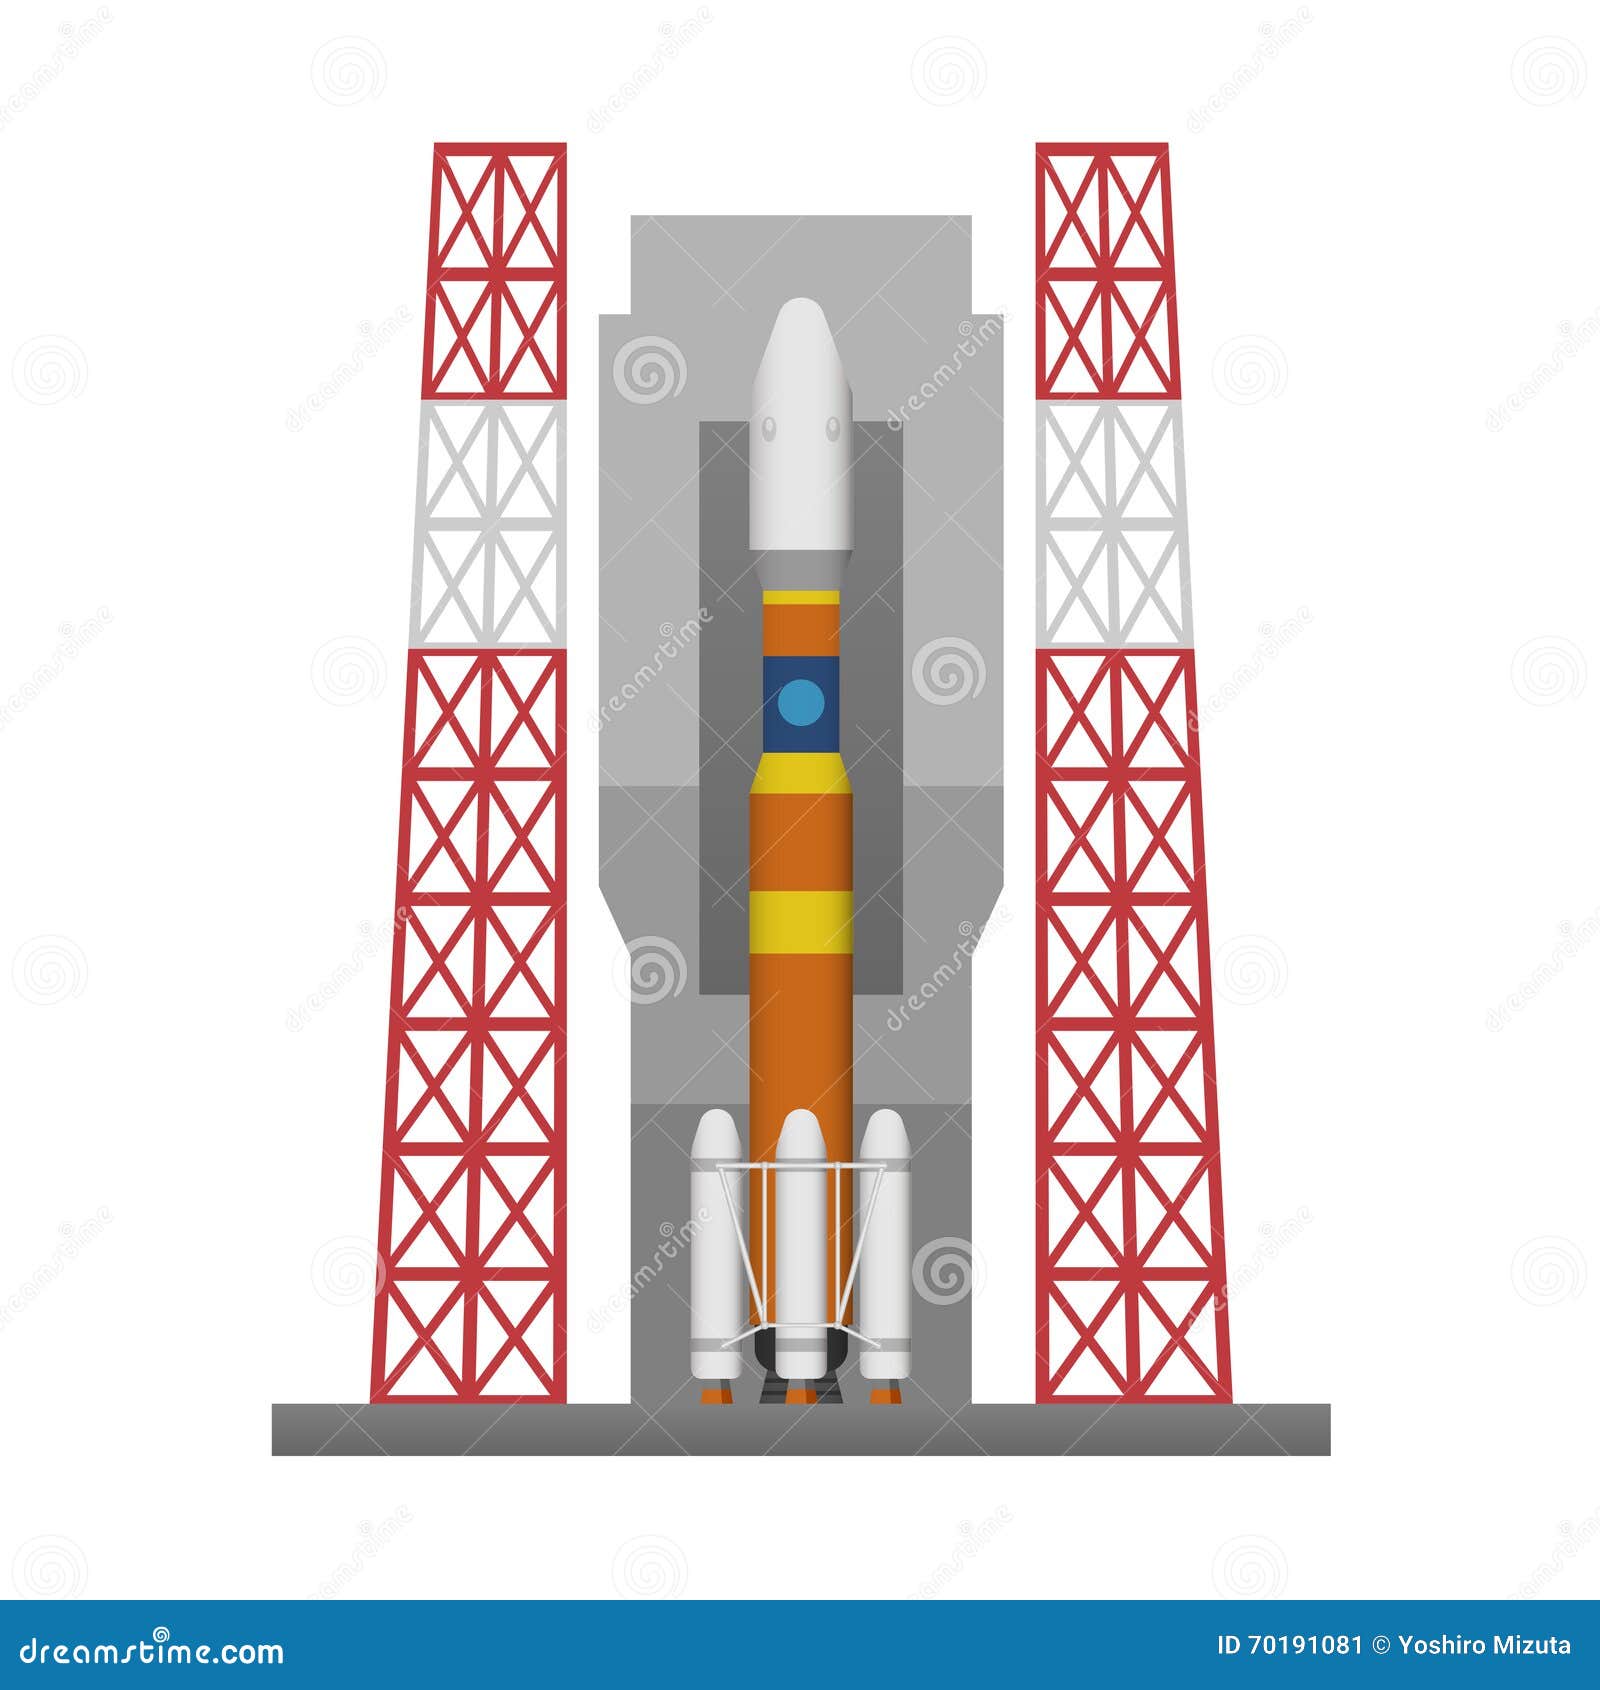 Rocket launch pad stock vector. Illustration of ballistic - 70191081